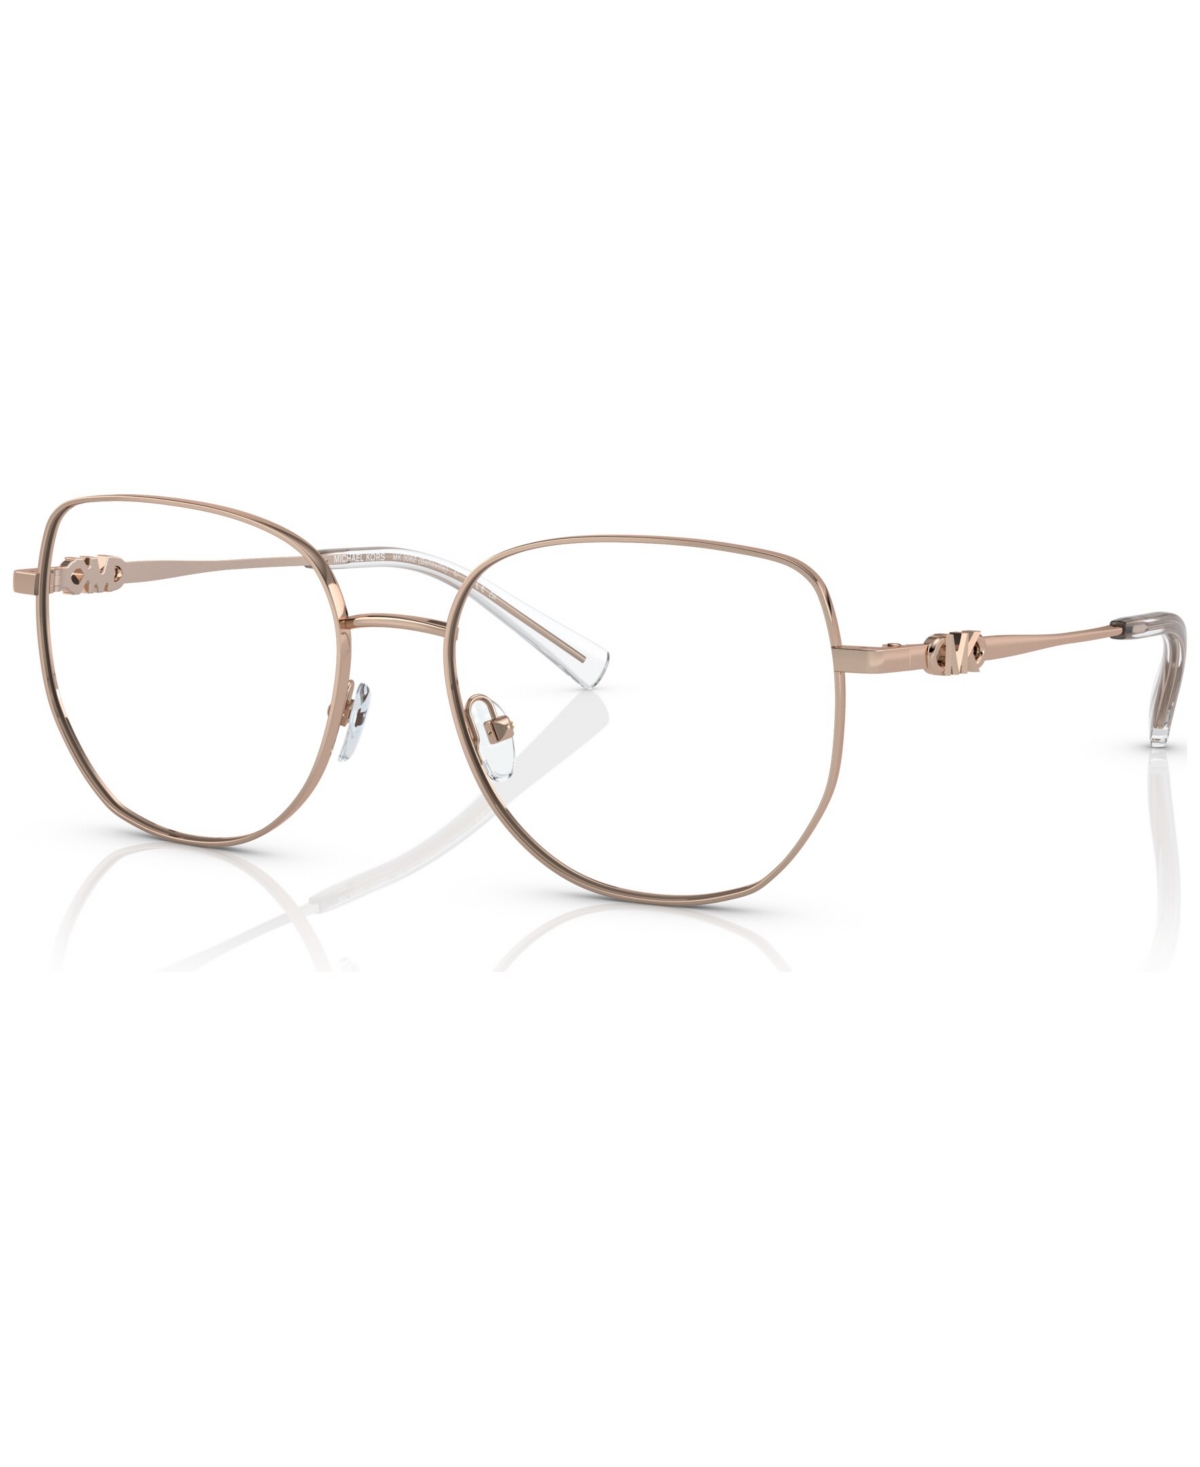 Women's Square Eyeglasses, MK306256-o - Rose Gold Tone